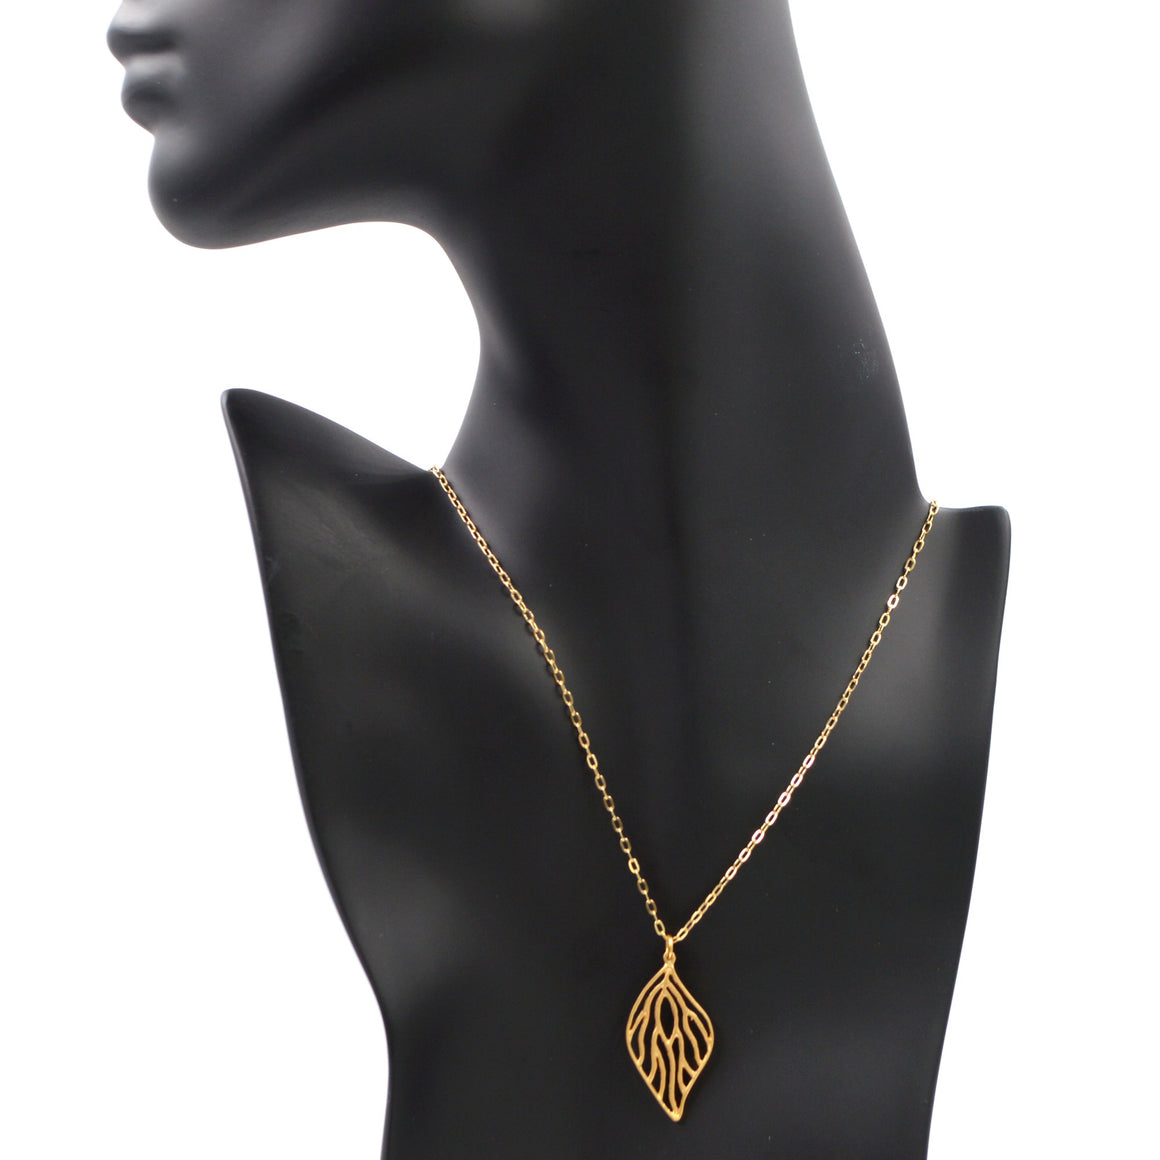 Open Leaf Pendant Necklace - 24K Gold Plated